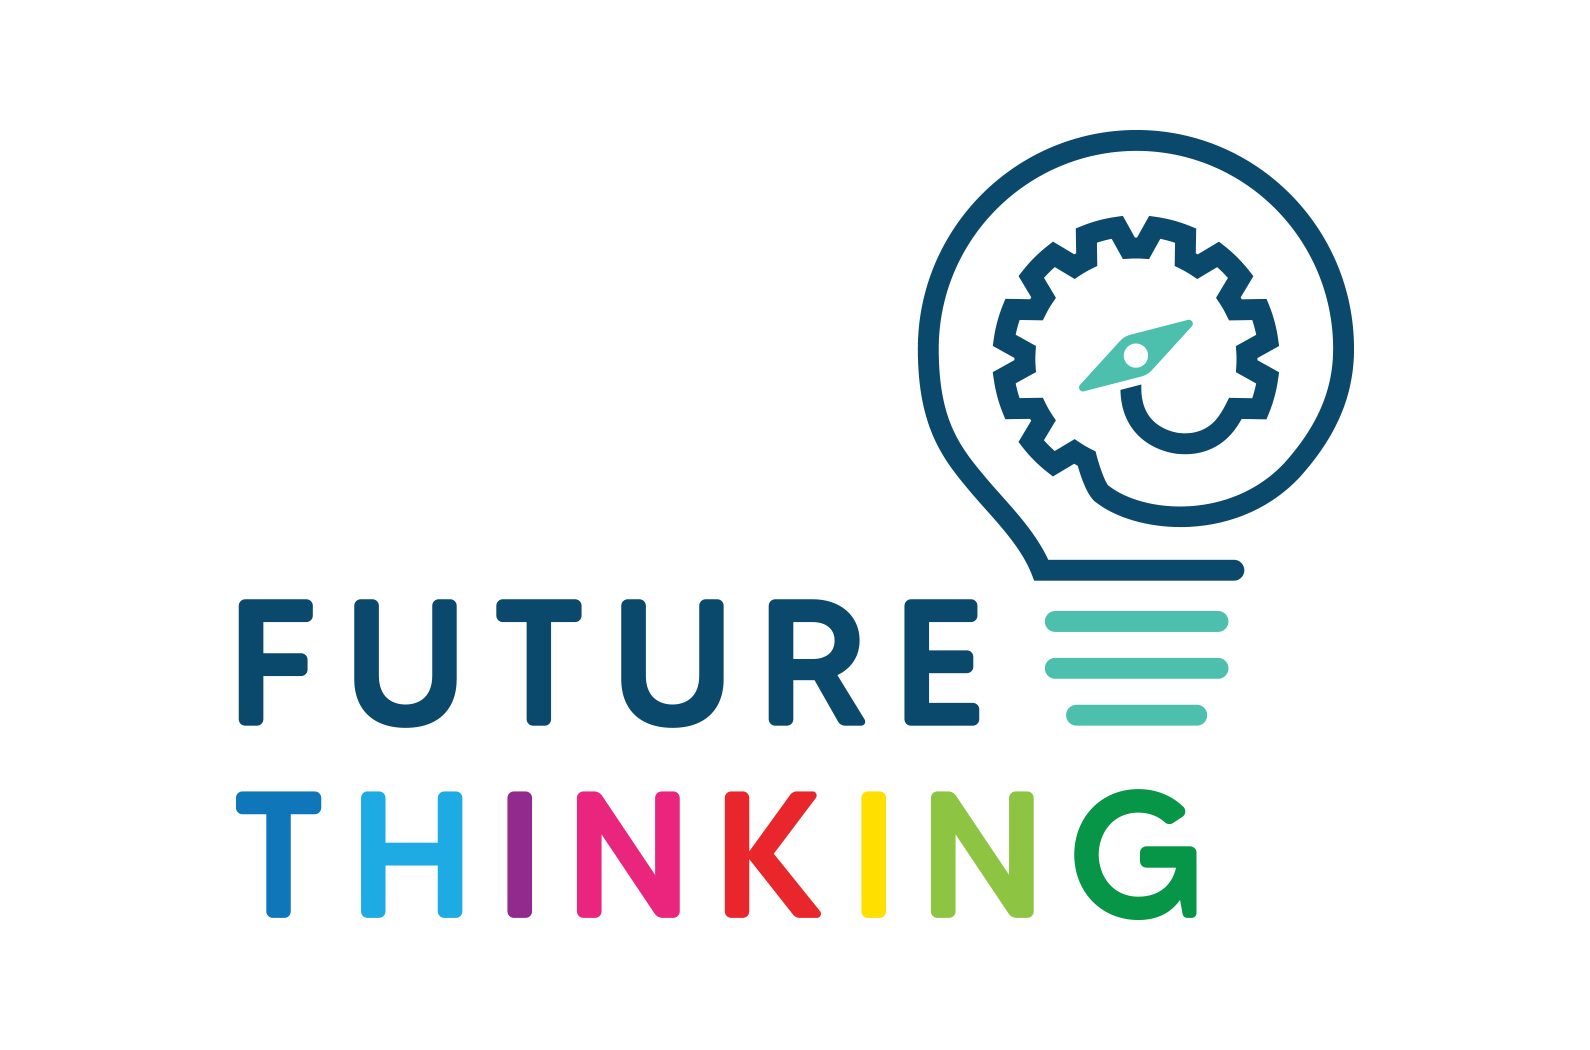 Future thinking logos full col